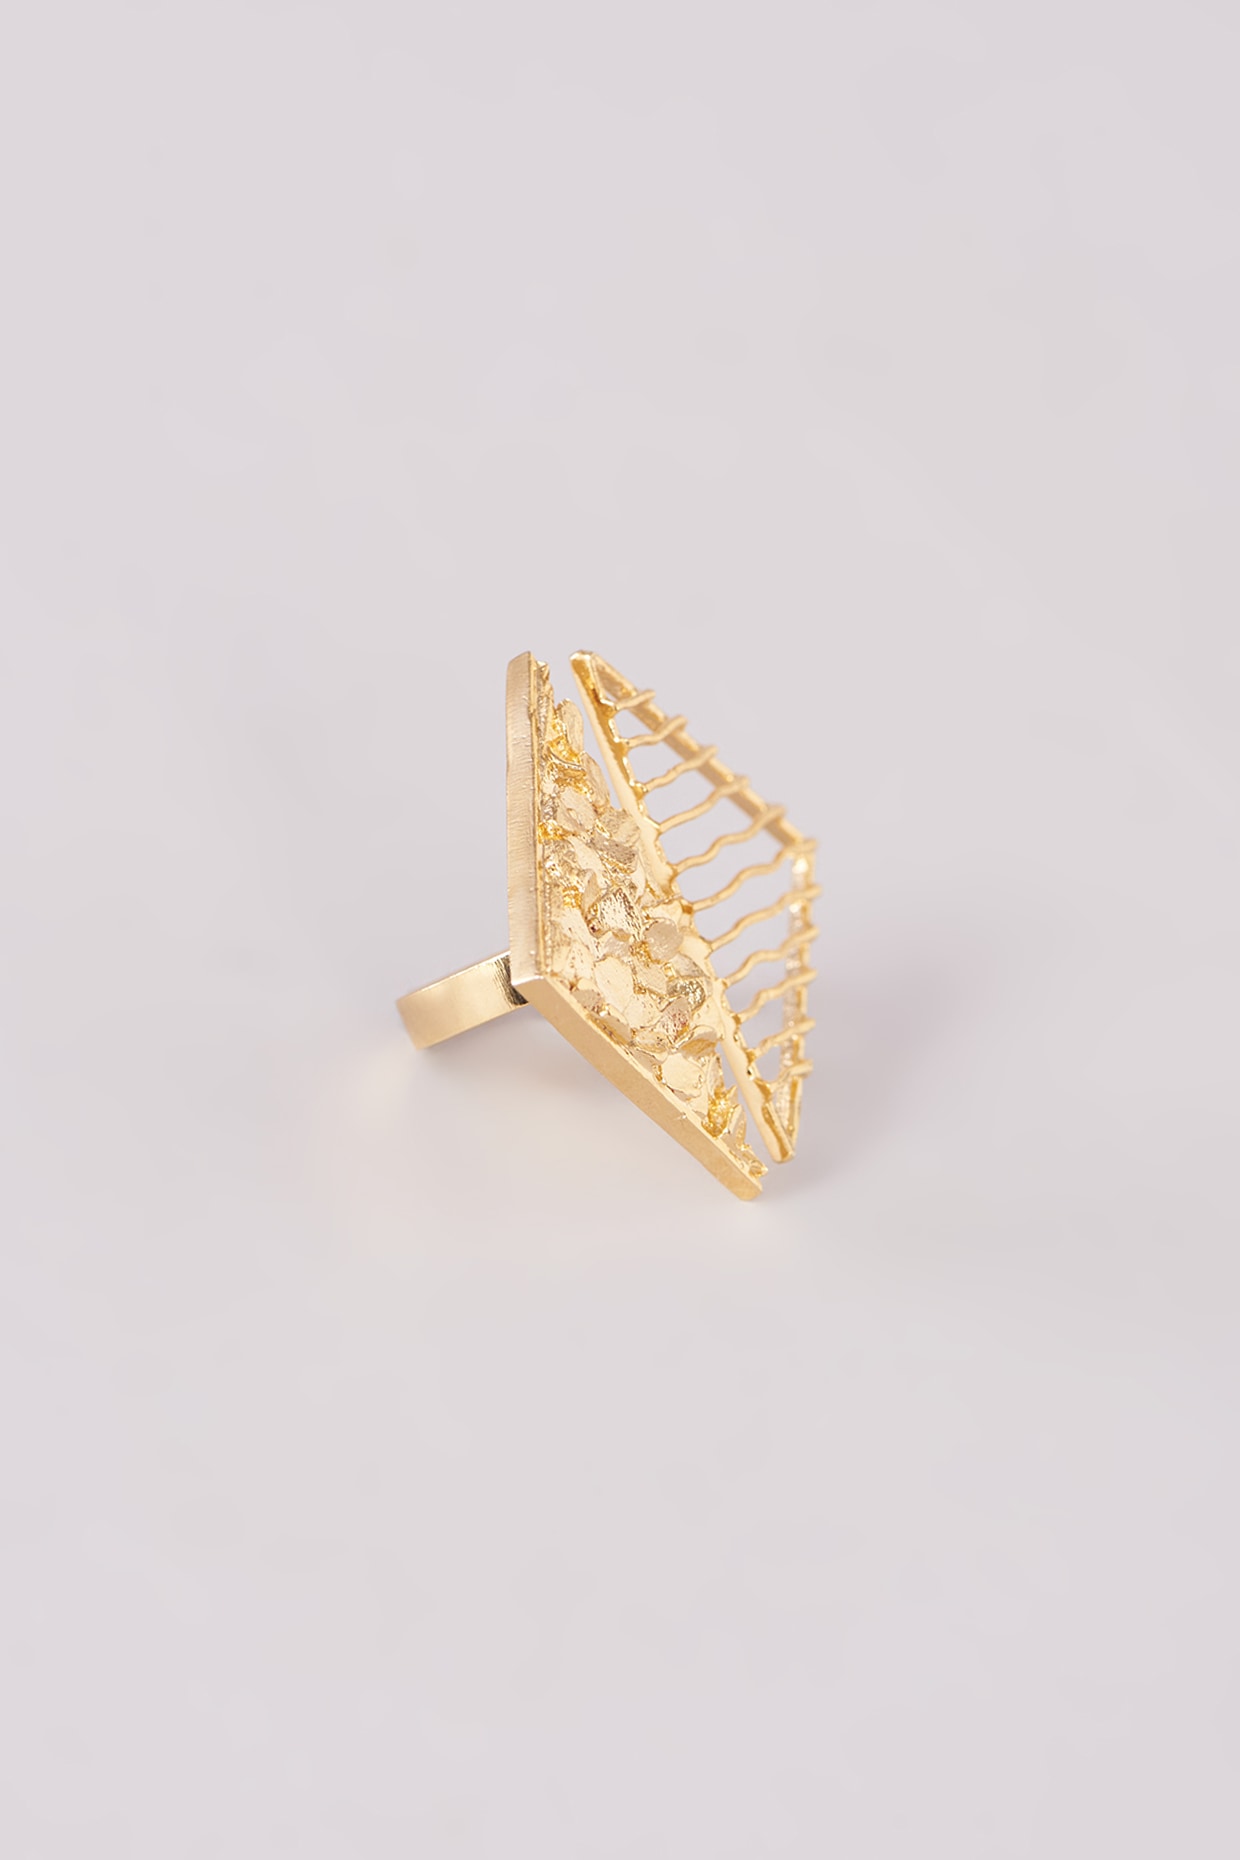 Half Carat Diamond Ring, Trillion Diamond Ring, Triangle Shape Diamond  Engagement Ring White Gold, 0.5ct Diamond Ring - Etsy